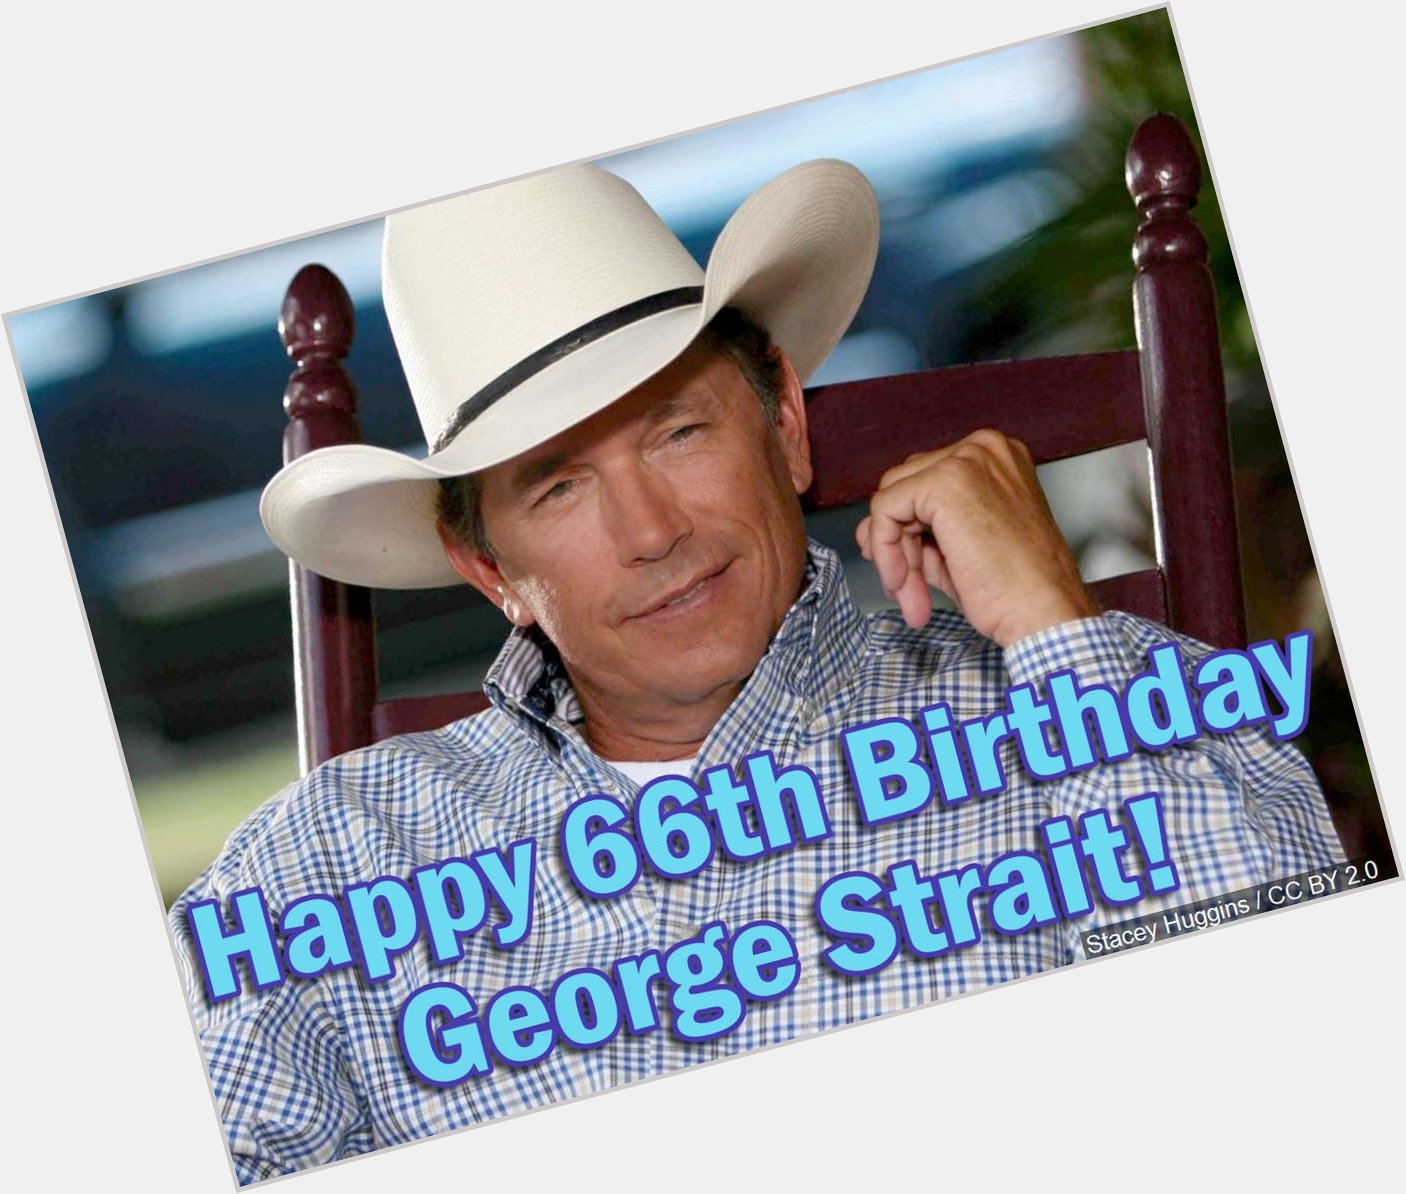 Happy birthday, George Strait!
  